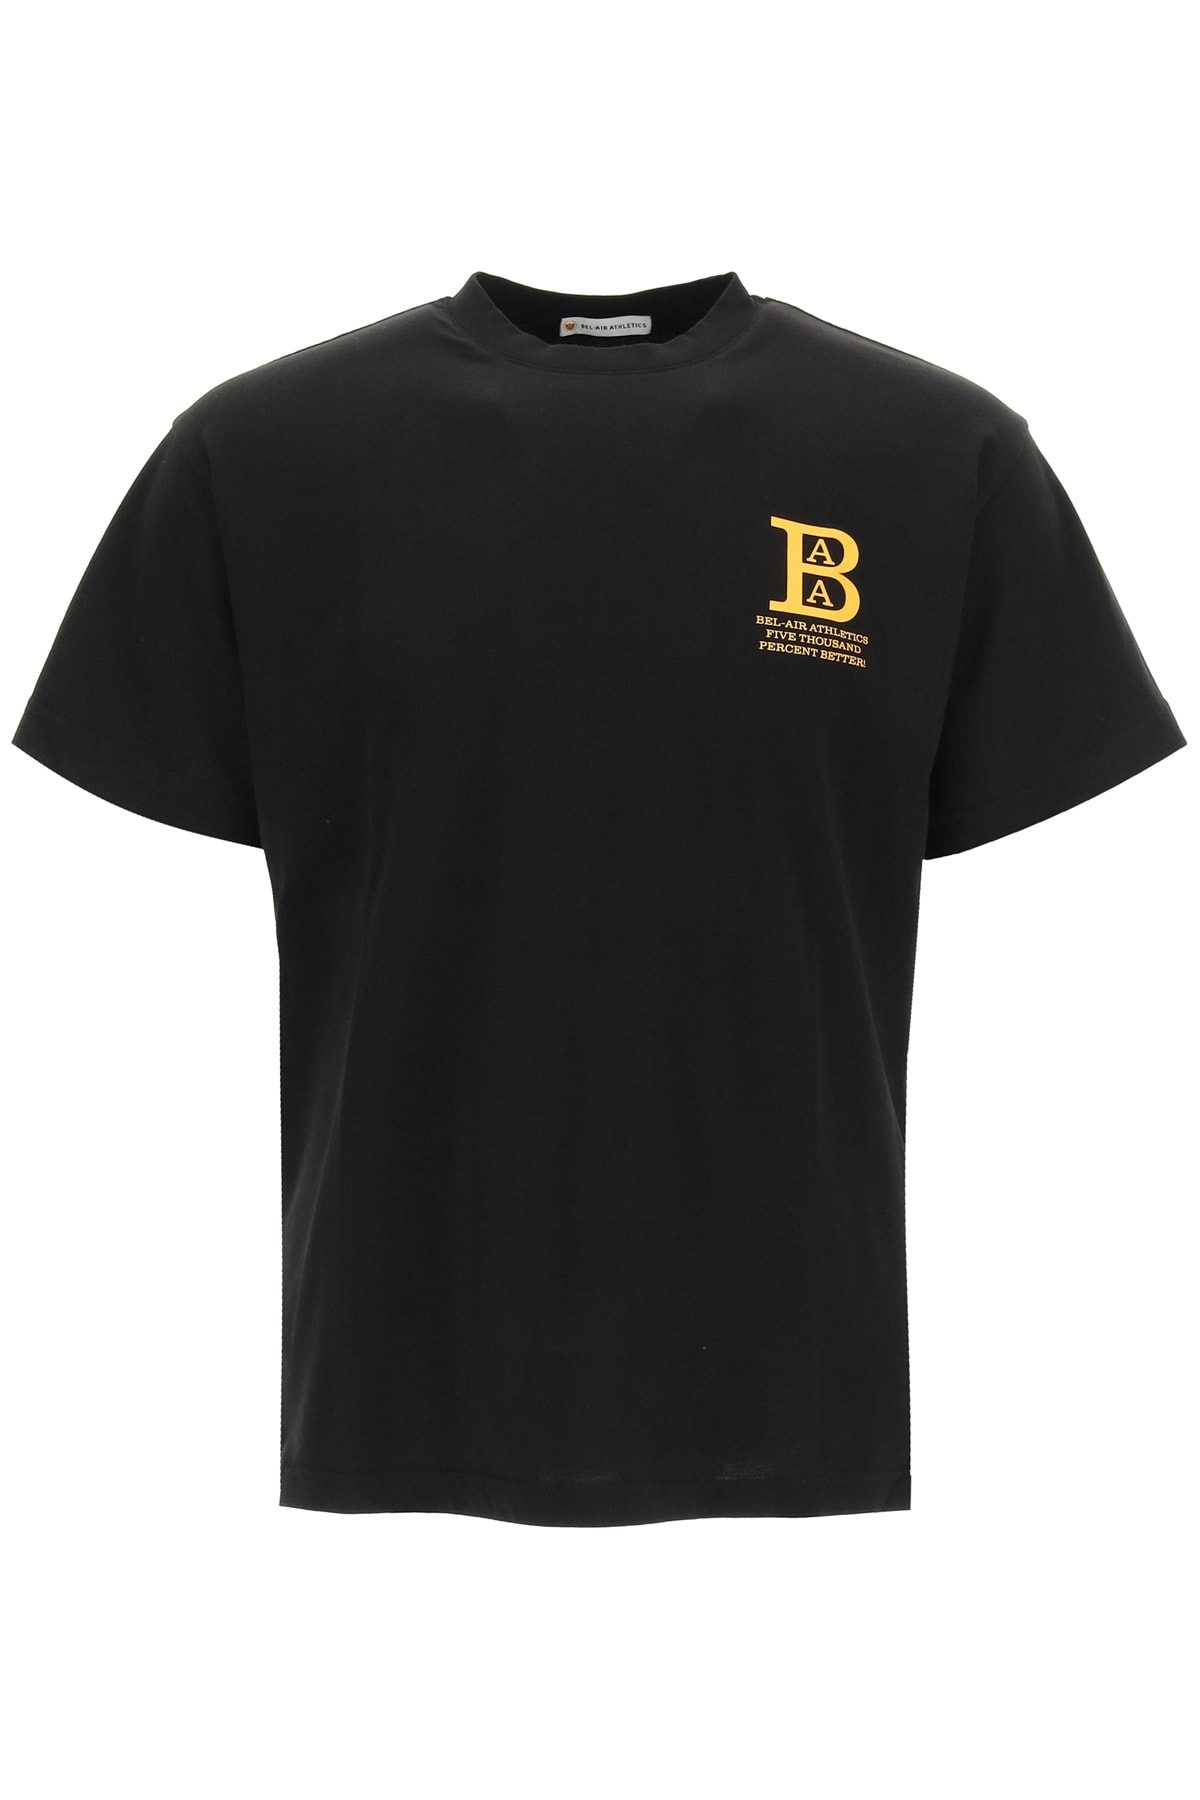 Bel-Air Athletics Cotton Jersey T-shirt